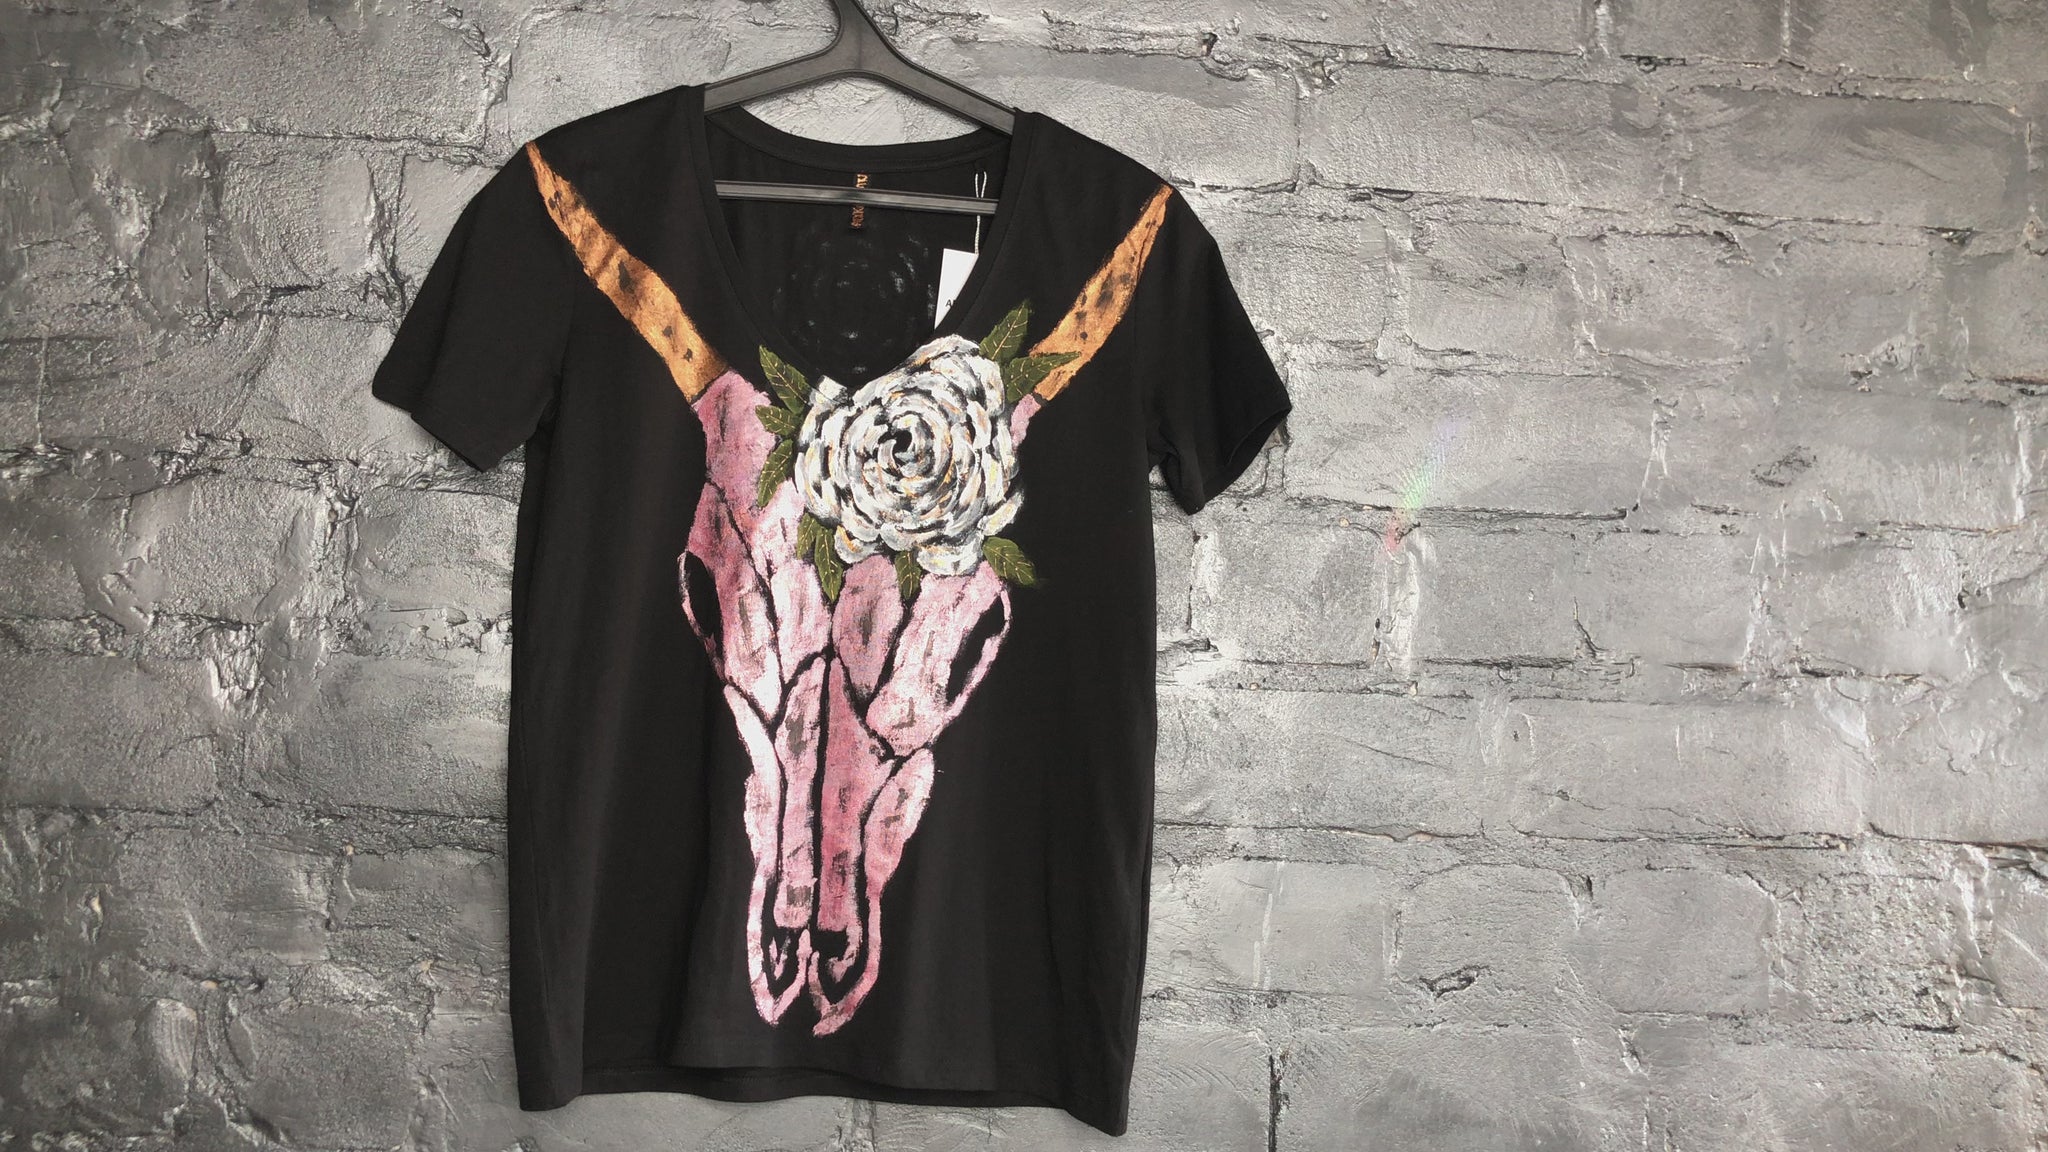 Women's short sleeve t-shirt pink gazelle skull